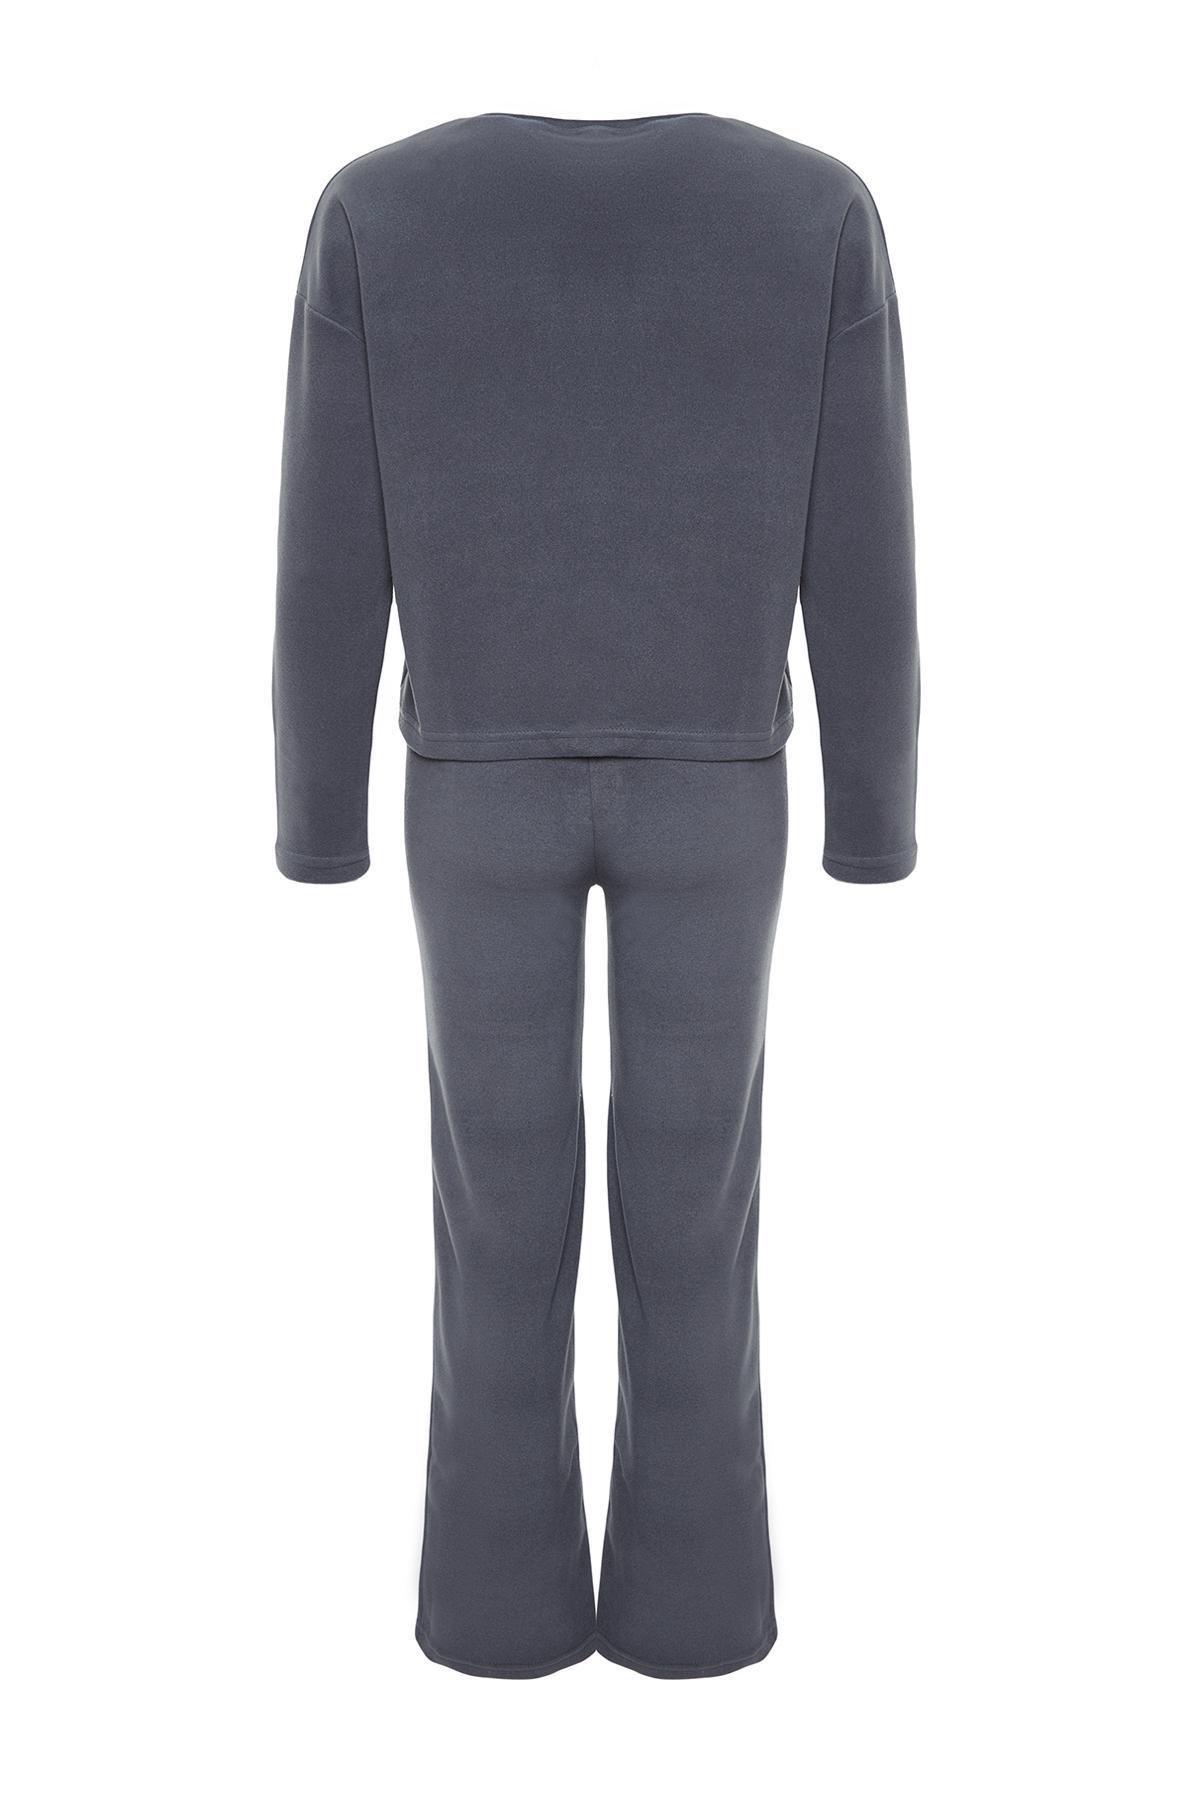 Trendyol - Grey Fleece Patterned Knitted Pyjamas Set